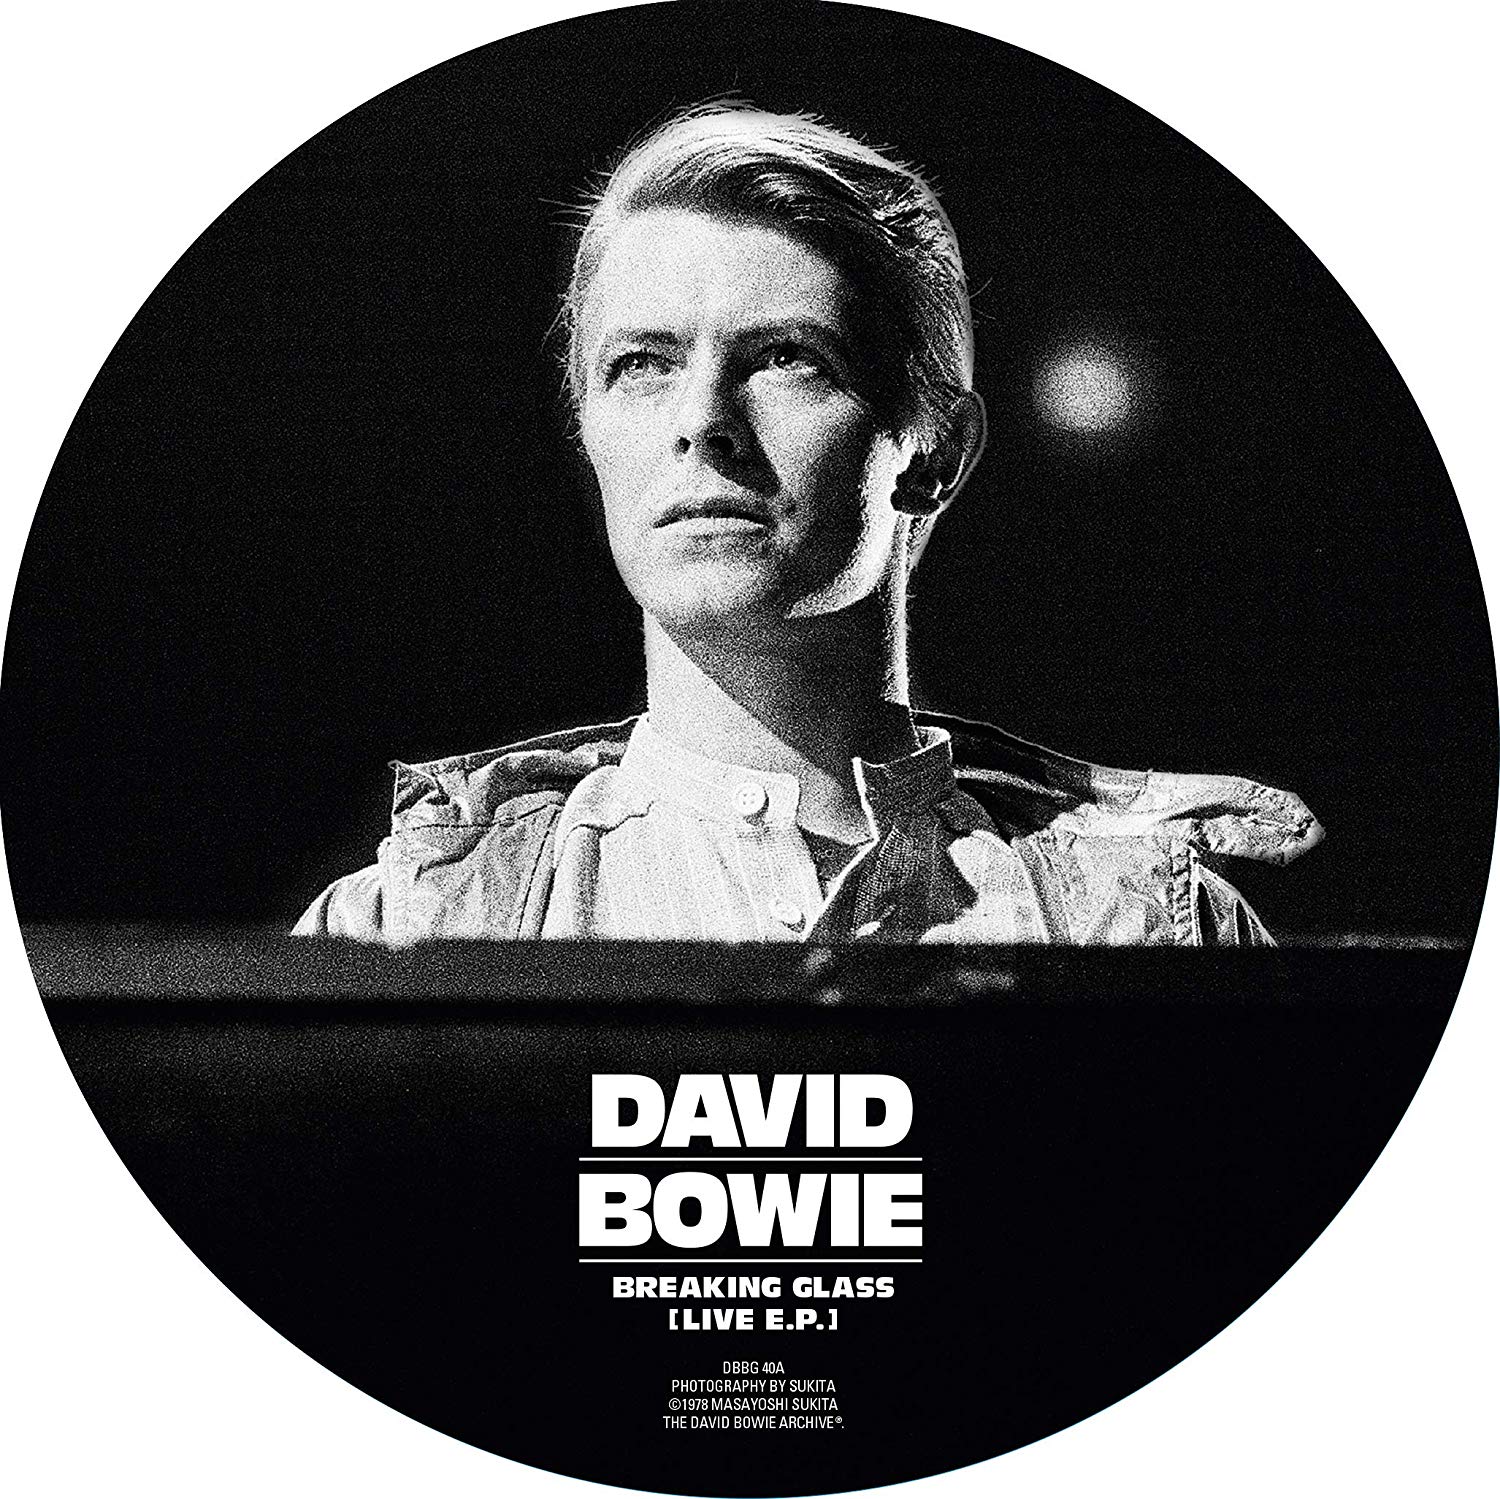 David Bowie / Aladdin Sane 40th anniversary remaster coming to CD